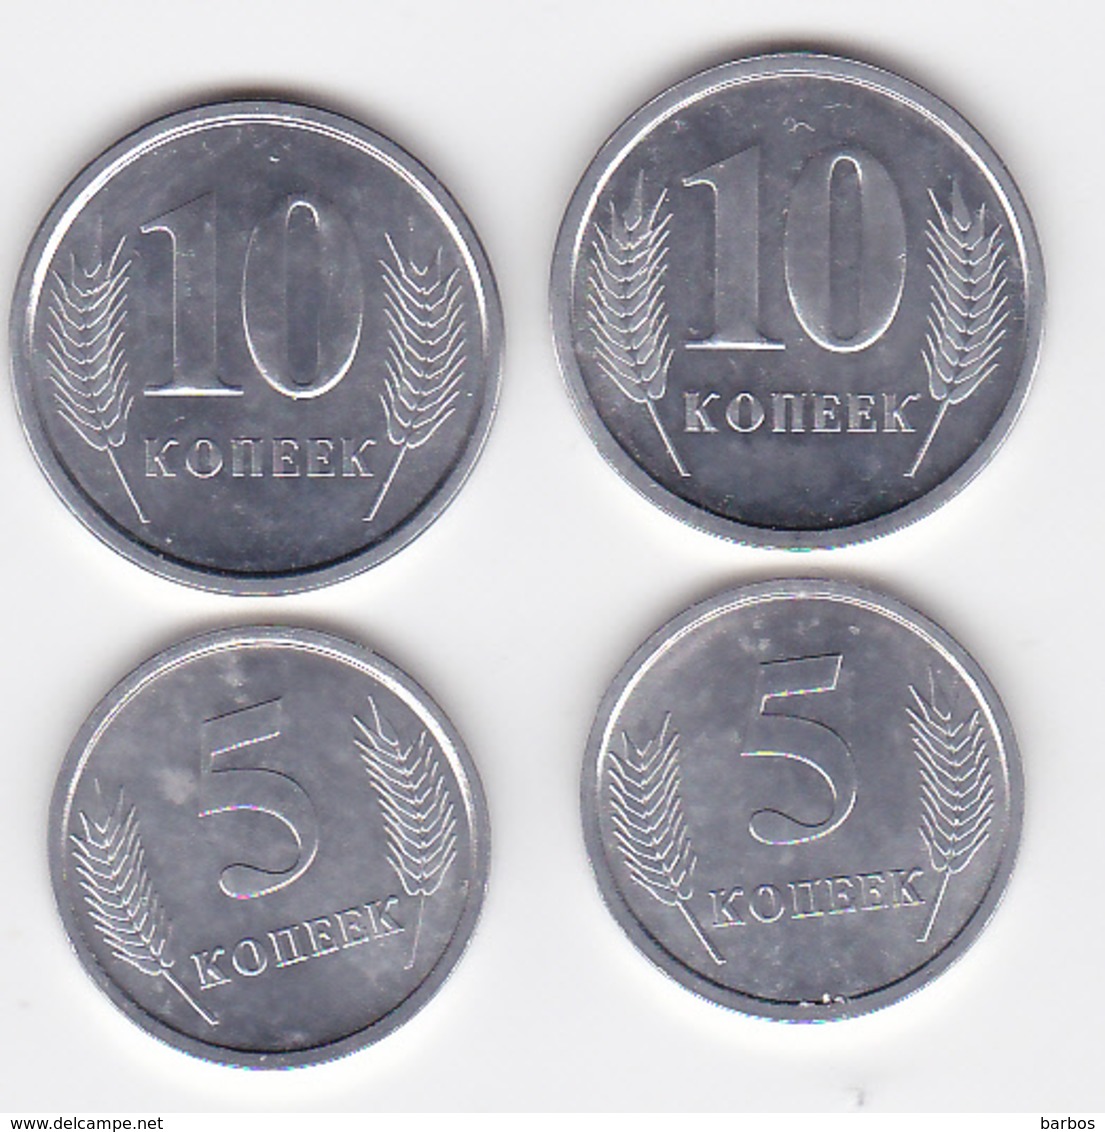 Transnistria , PMR , Pridnestrovie , 10 Kop , 2000 Year , 5 Kop. , 2005  ,  Coins - Moldavia